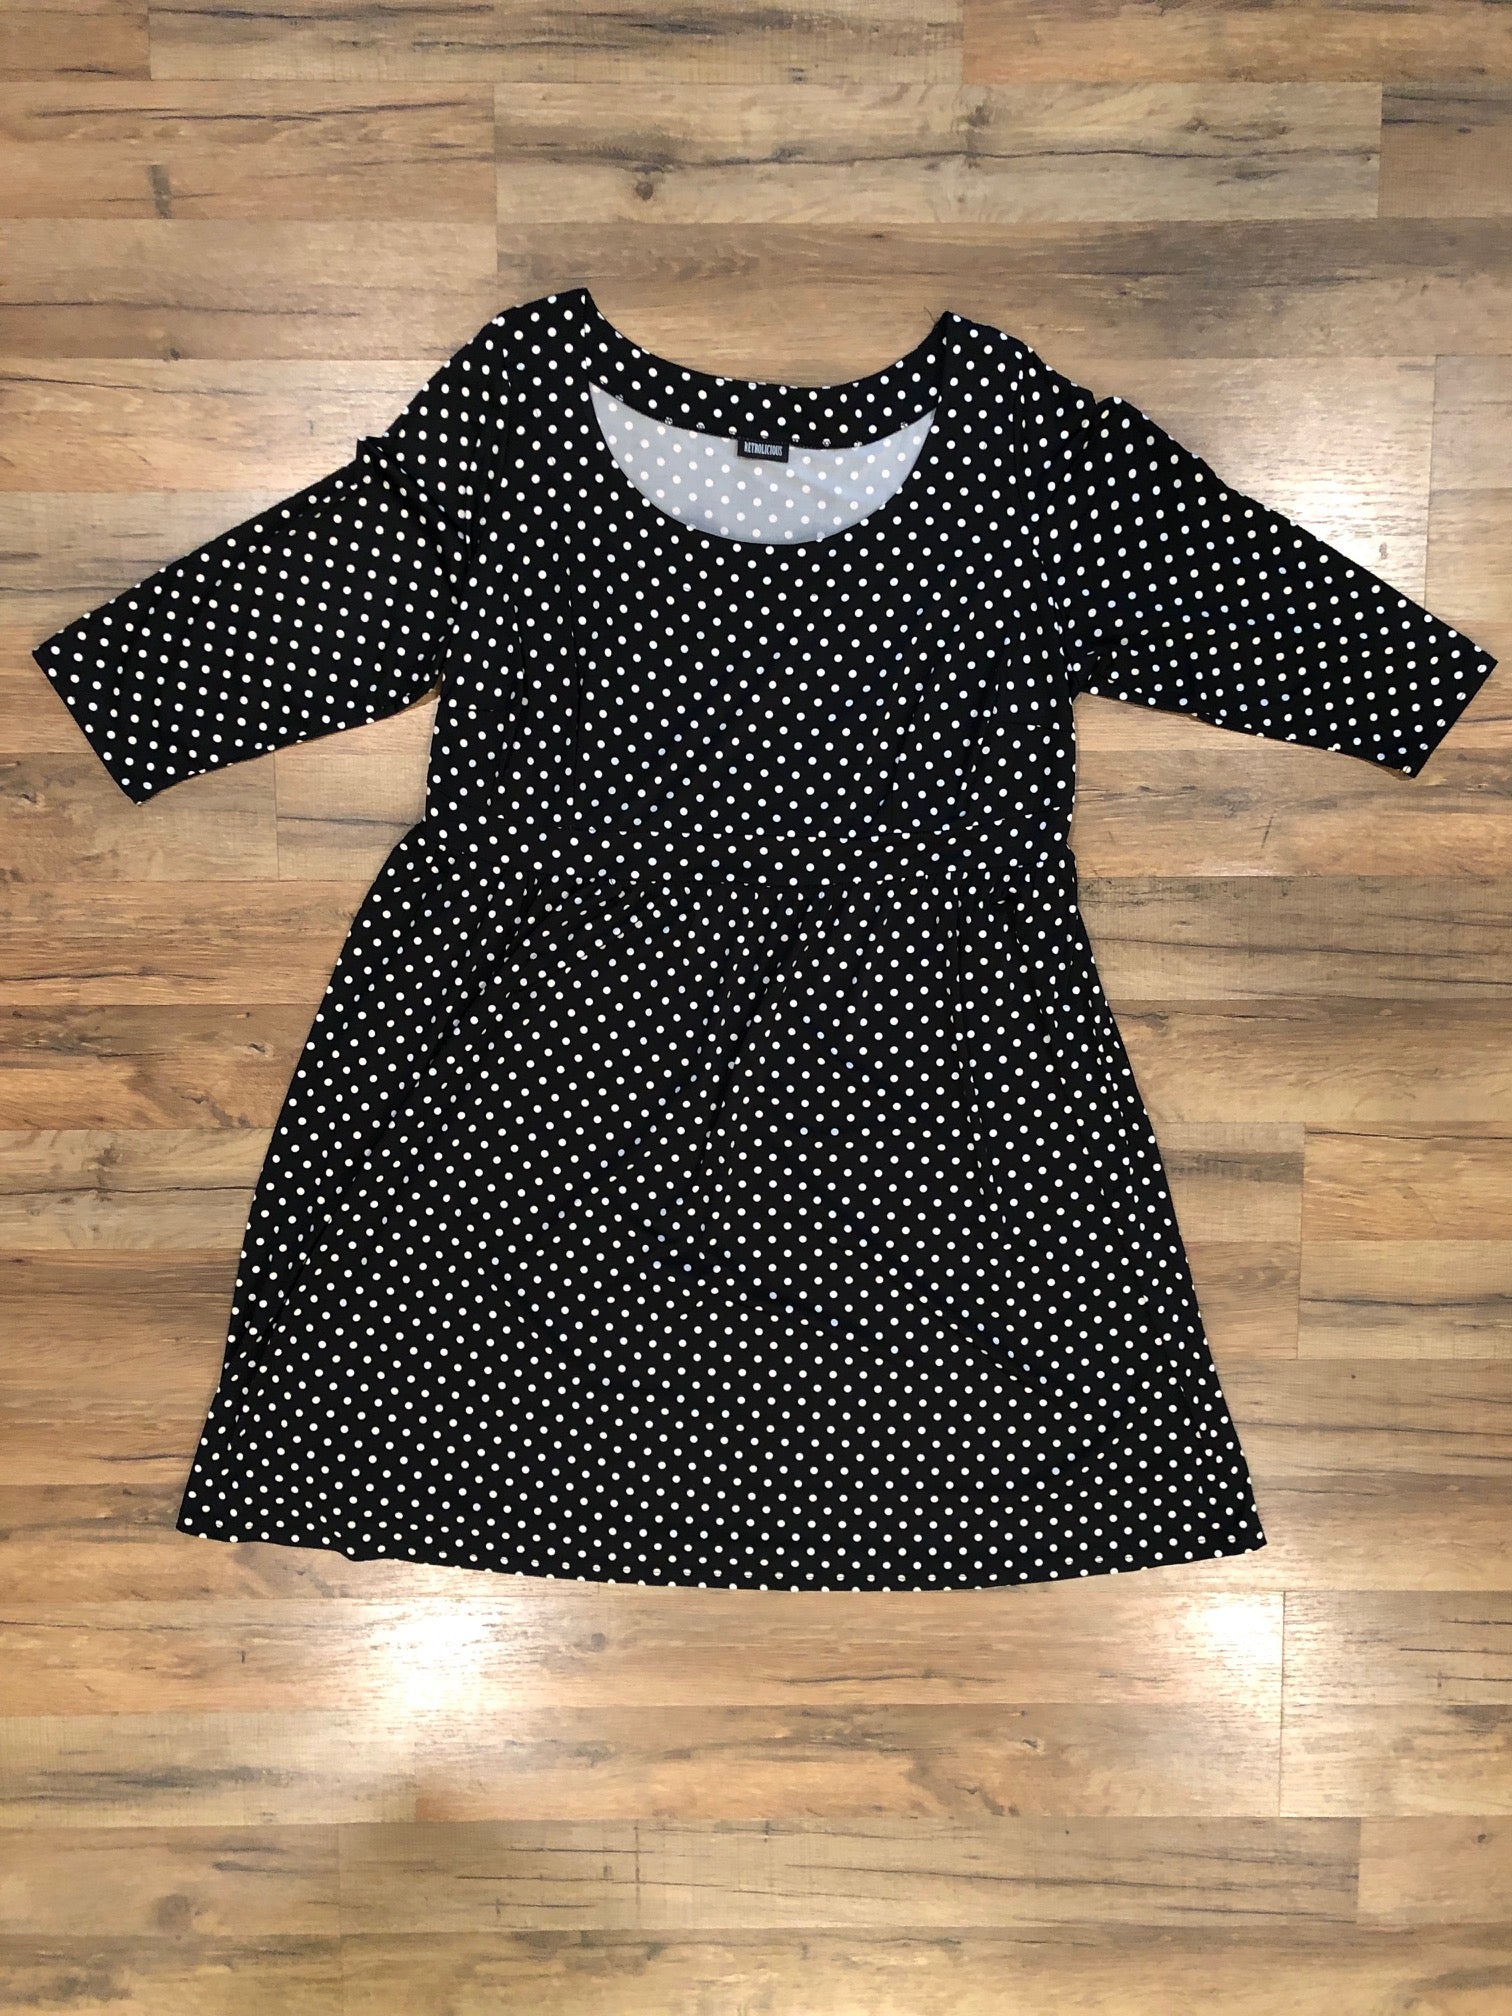 polka dot dress with 3/4 sleeve arms